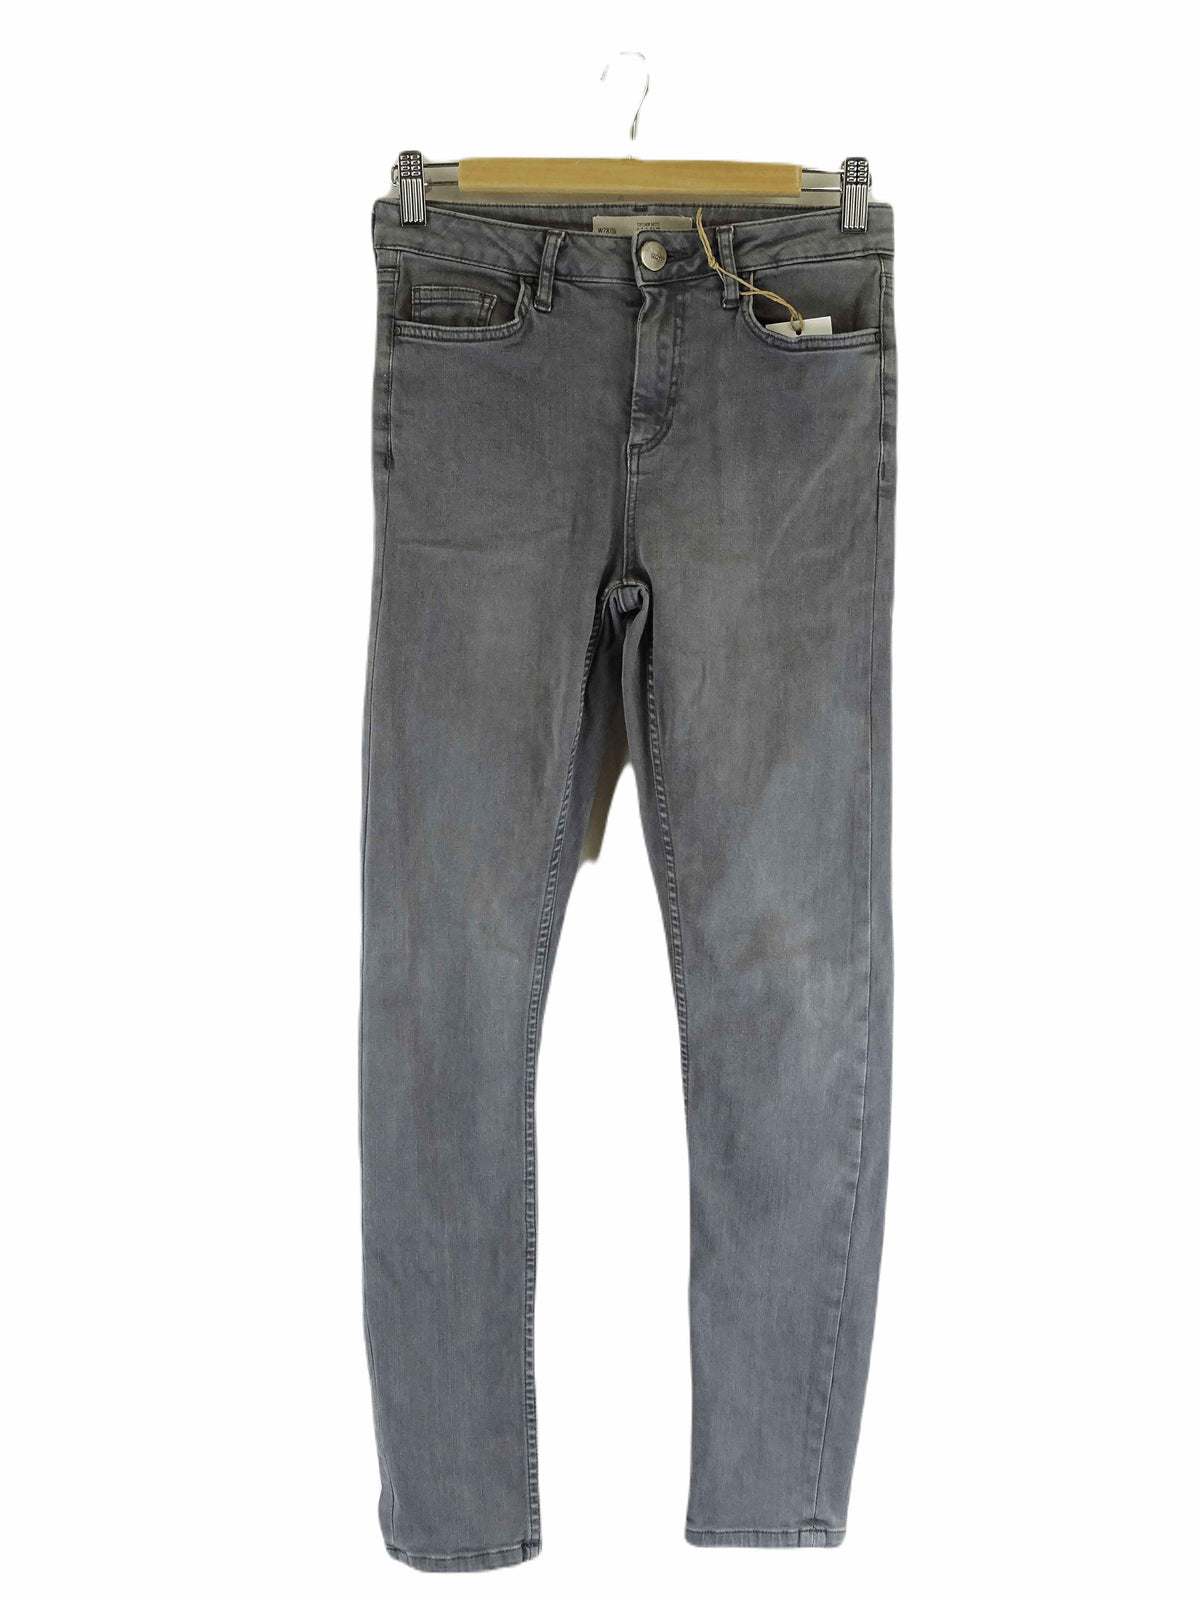 Topshop Grey Jeans 10